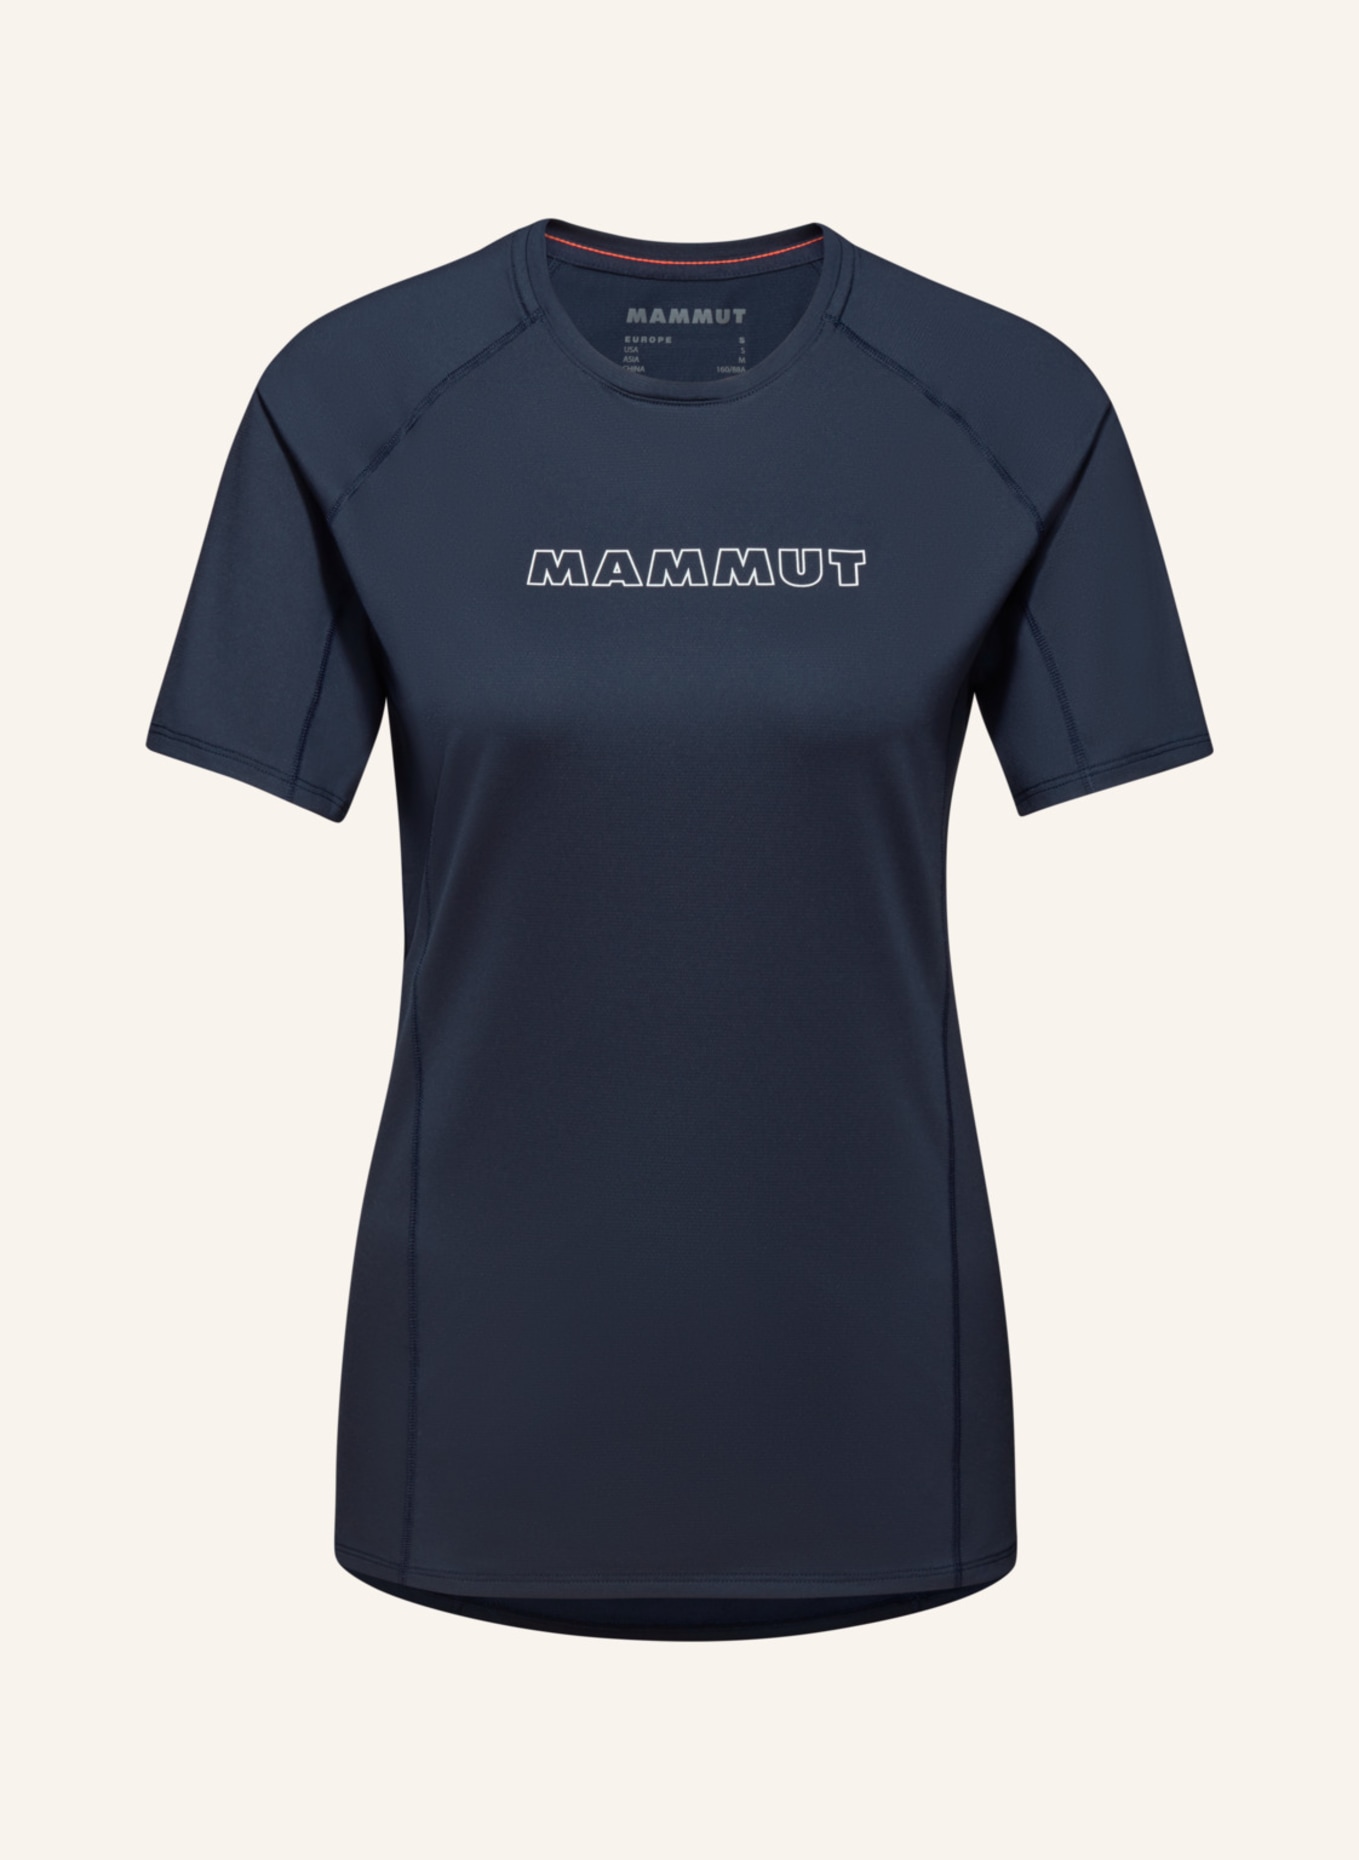 MAMMUT Mammut Selun FL T-Shirt Women Logo, Farbe: BLAU (Bild 1)